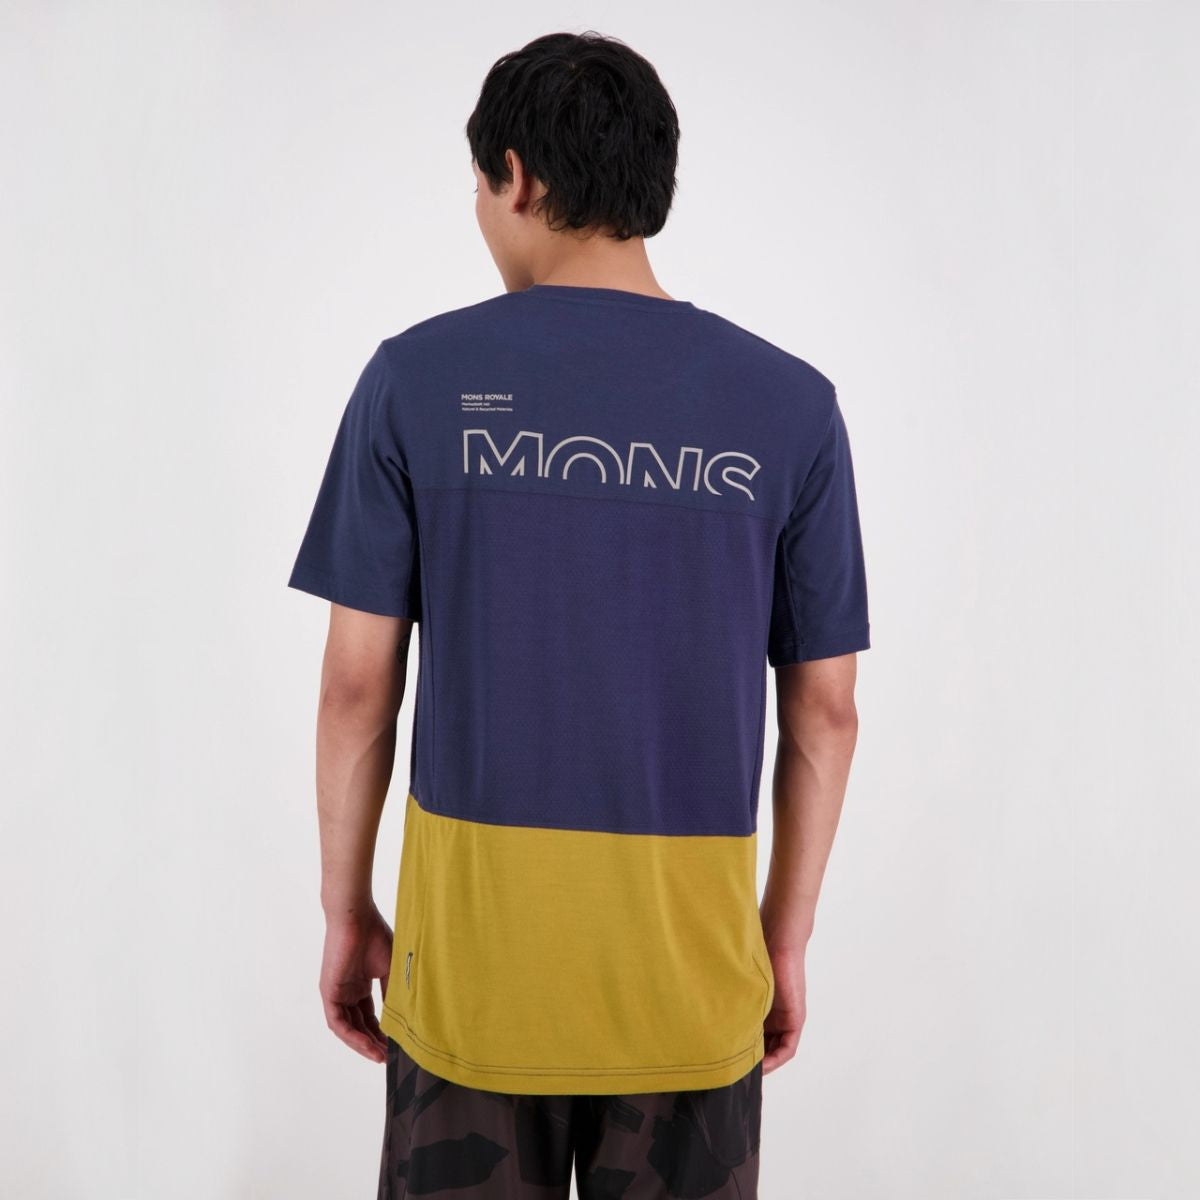 Mons Royale - Men's Tarn Merino Shift T-Shirt - Cumin / Midnight